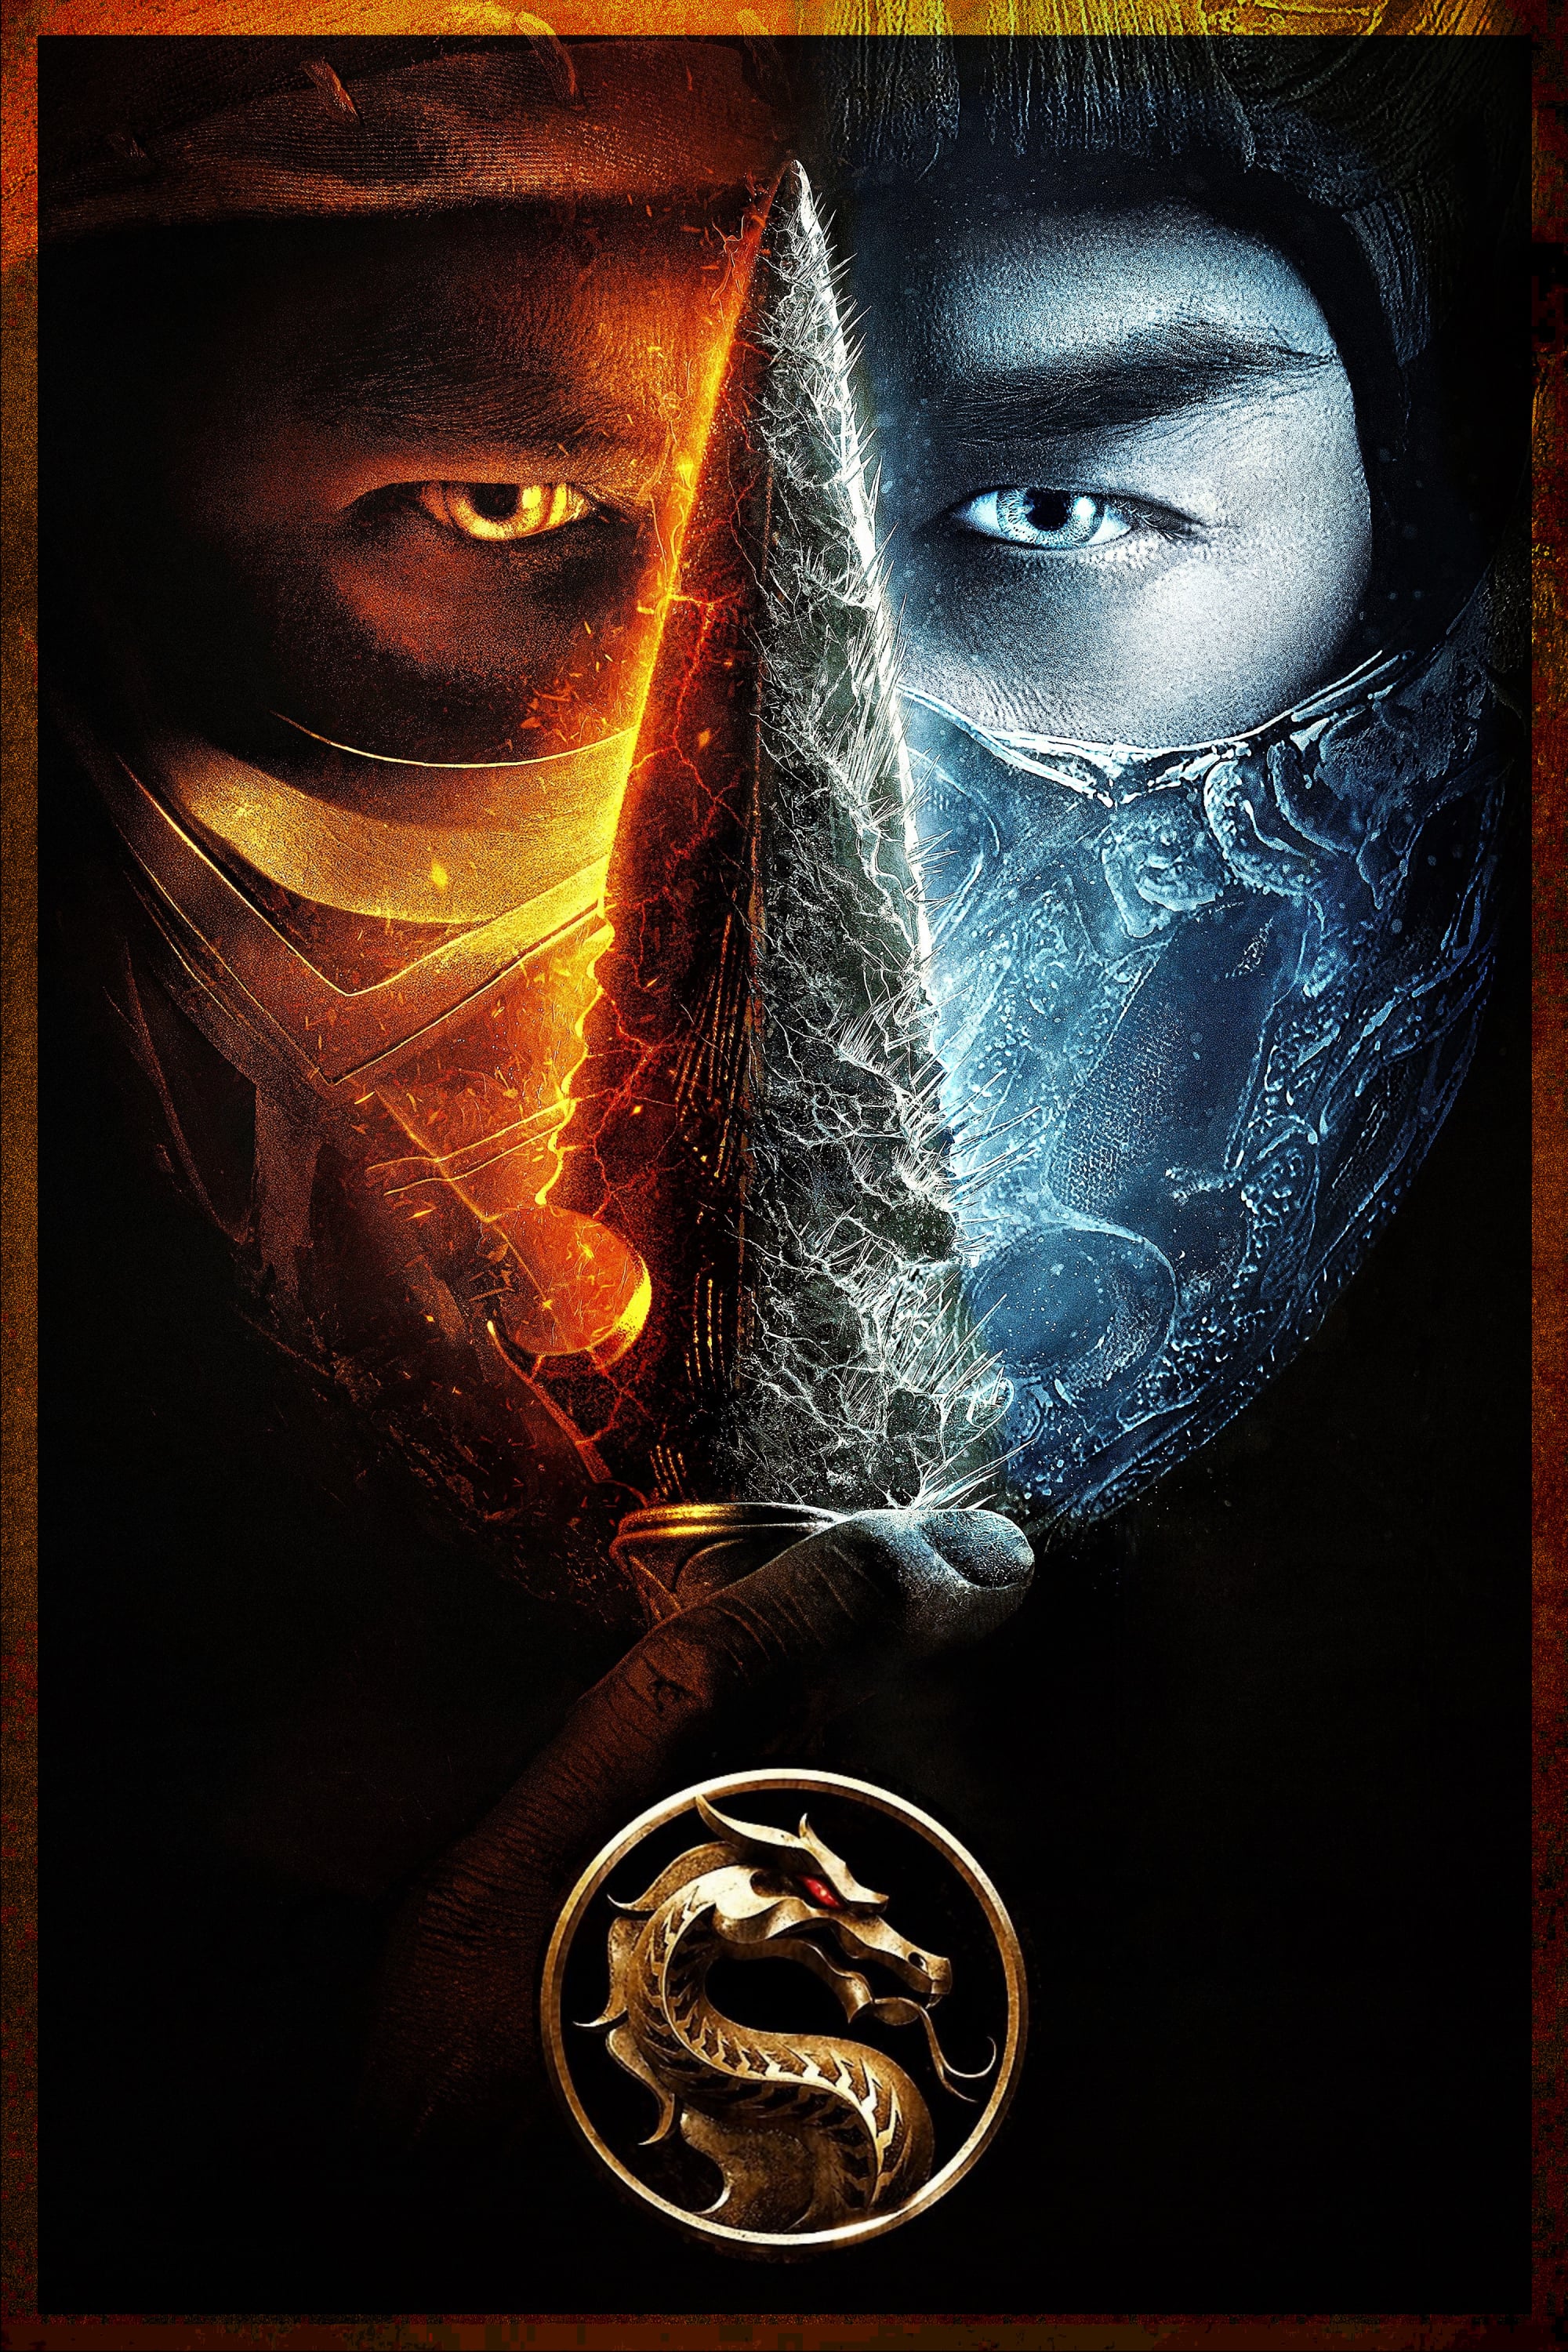 Mortal Kombat (2021) live-action movie poster showing Scorpion, Subzero, and the Mortal Kombat logo.